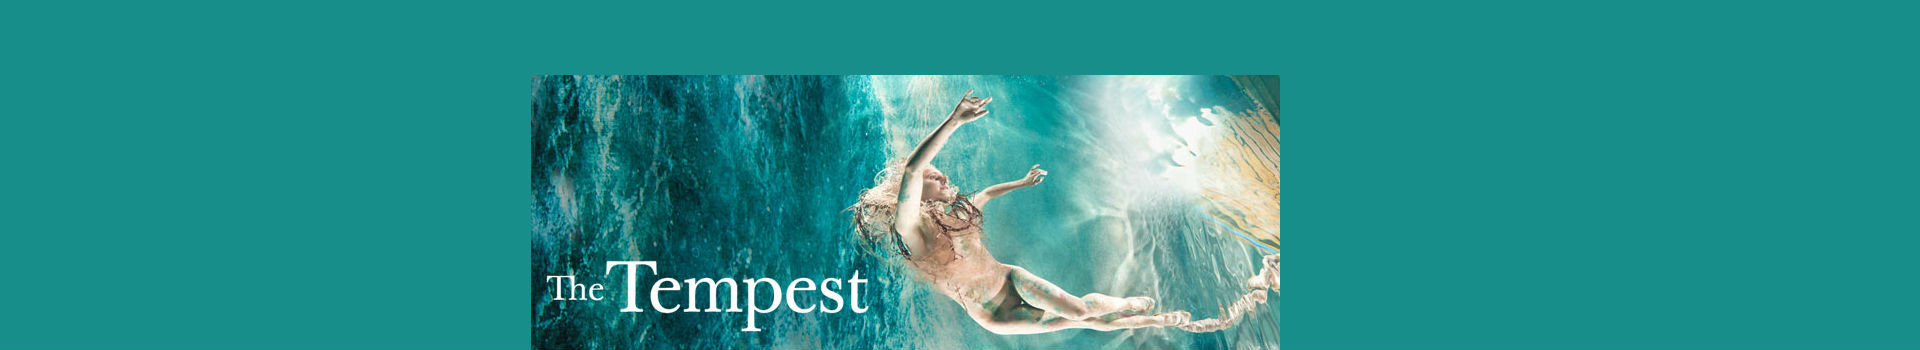 Birmingham Royal Ballet — The Tempest  banner image